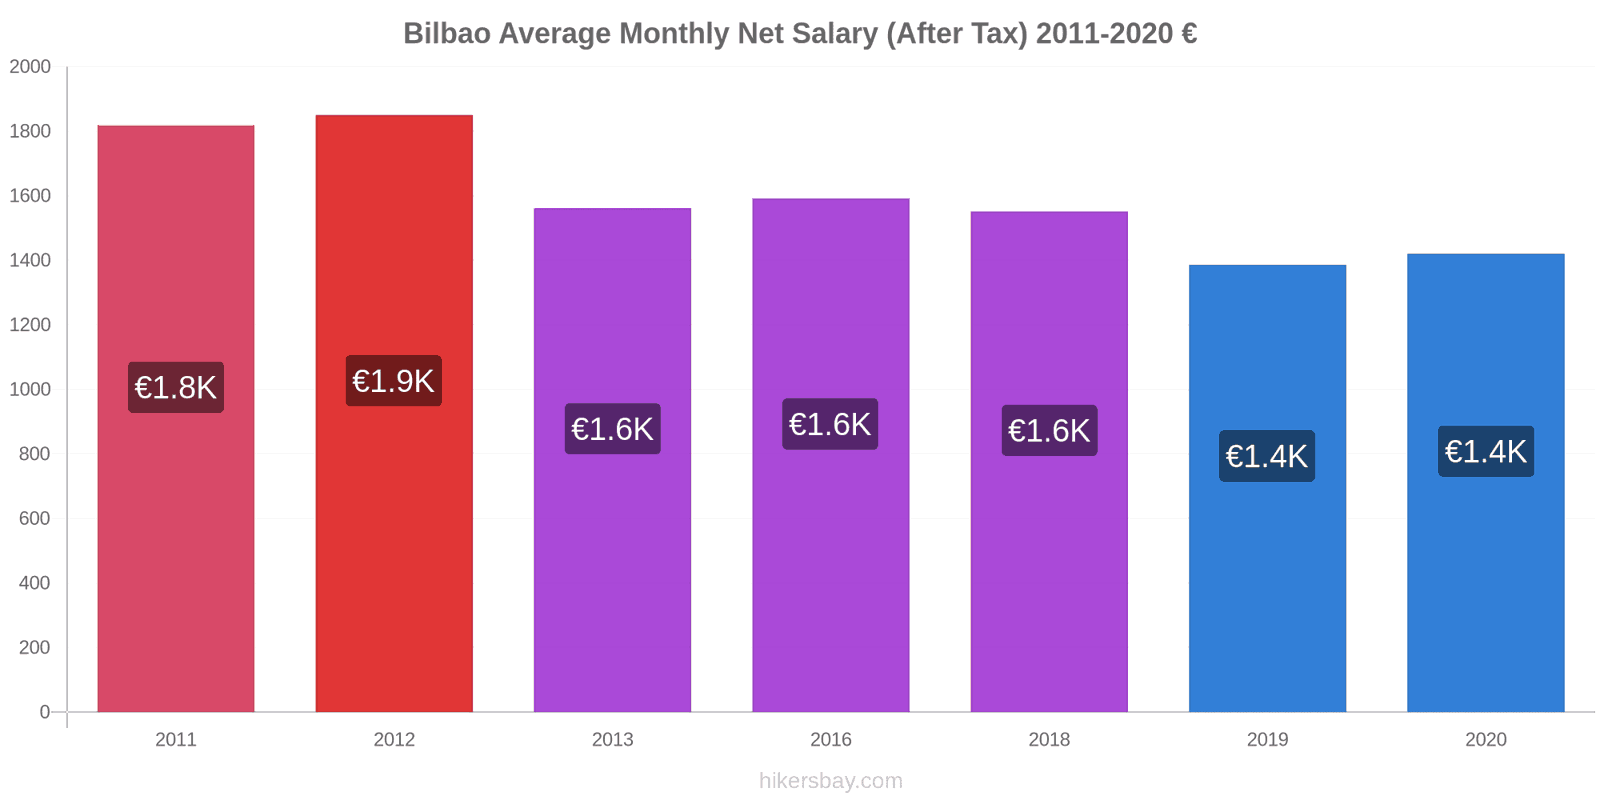 Bilbao price changes Average Monthly Net Salary (After Tax) hikersbay.com